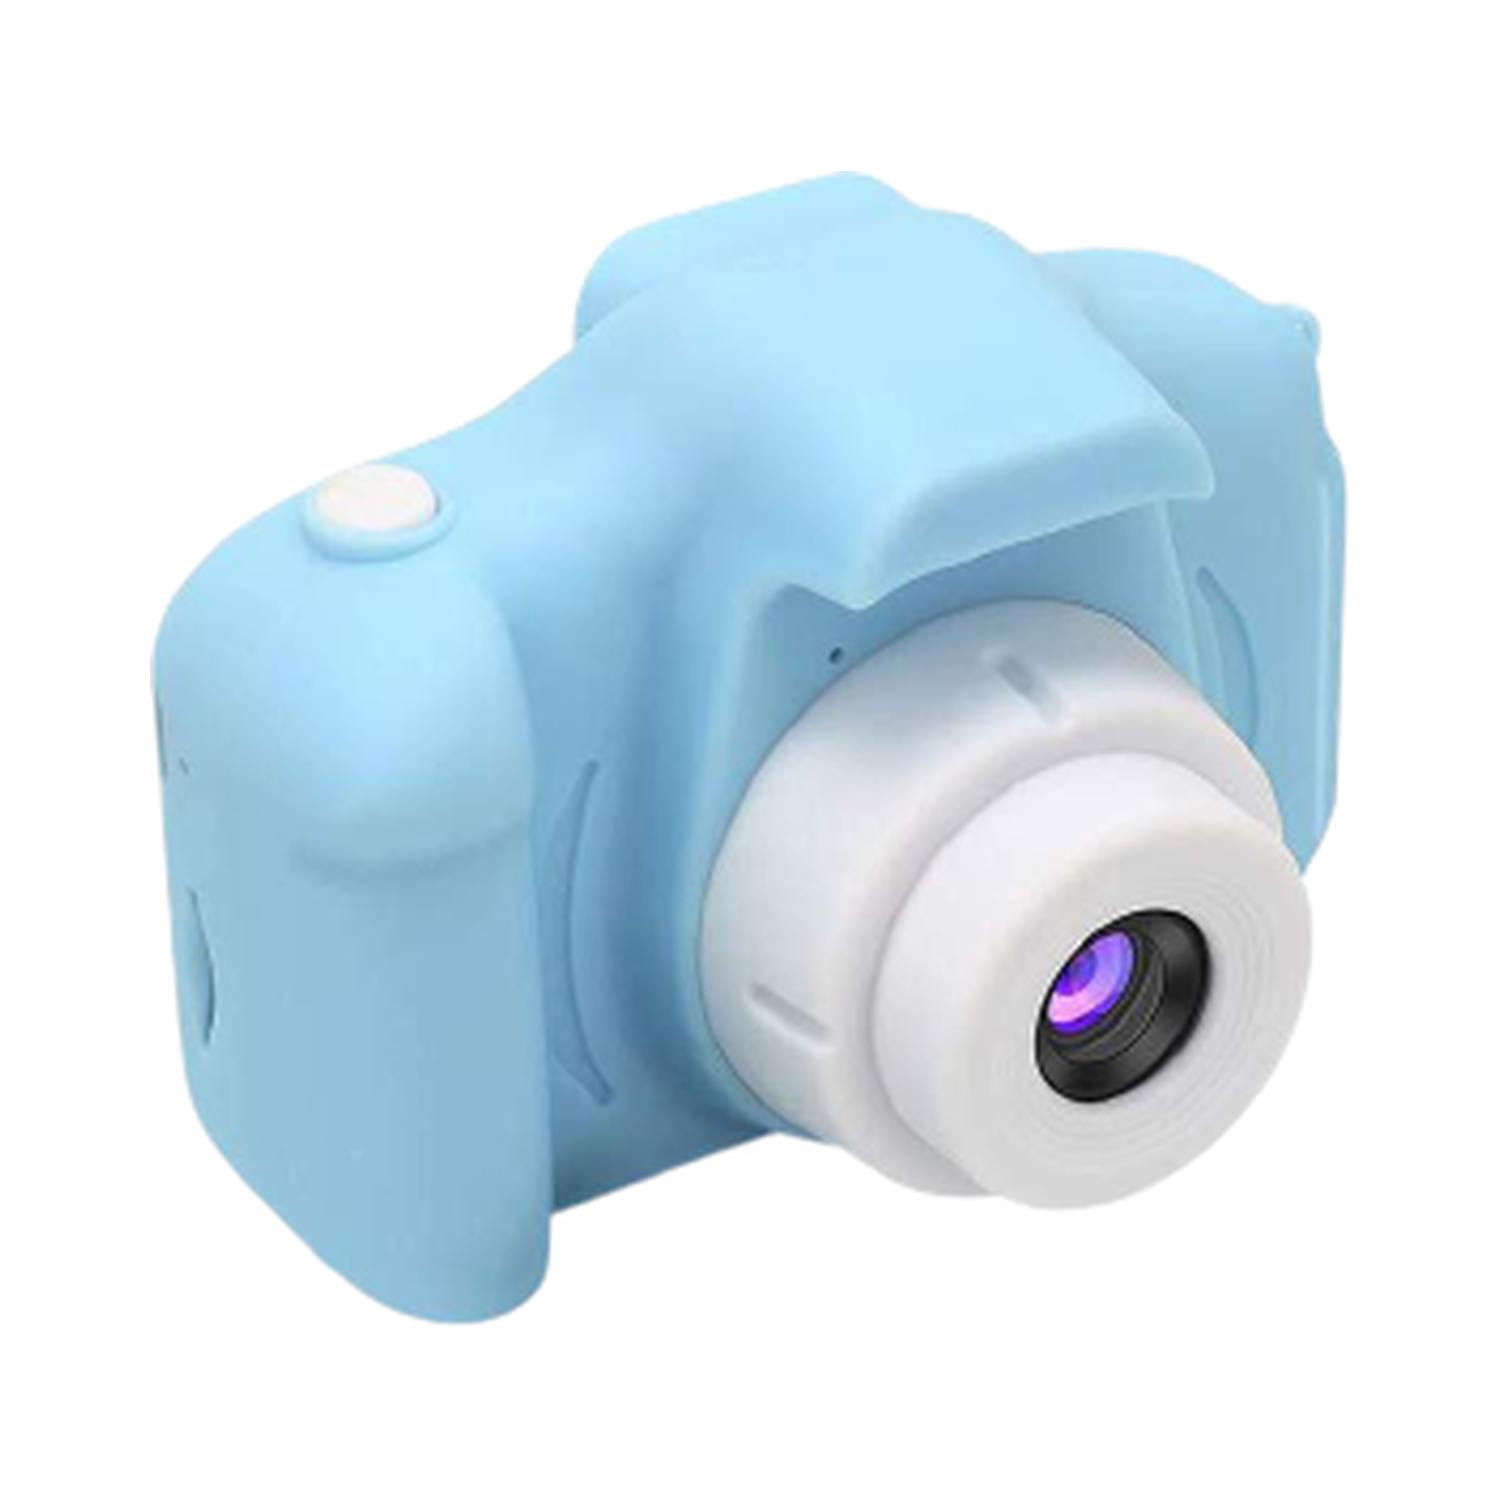 Фотоаппарат Uniglodis детский цифровой мини голубой - фото 1